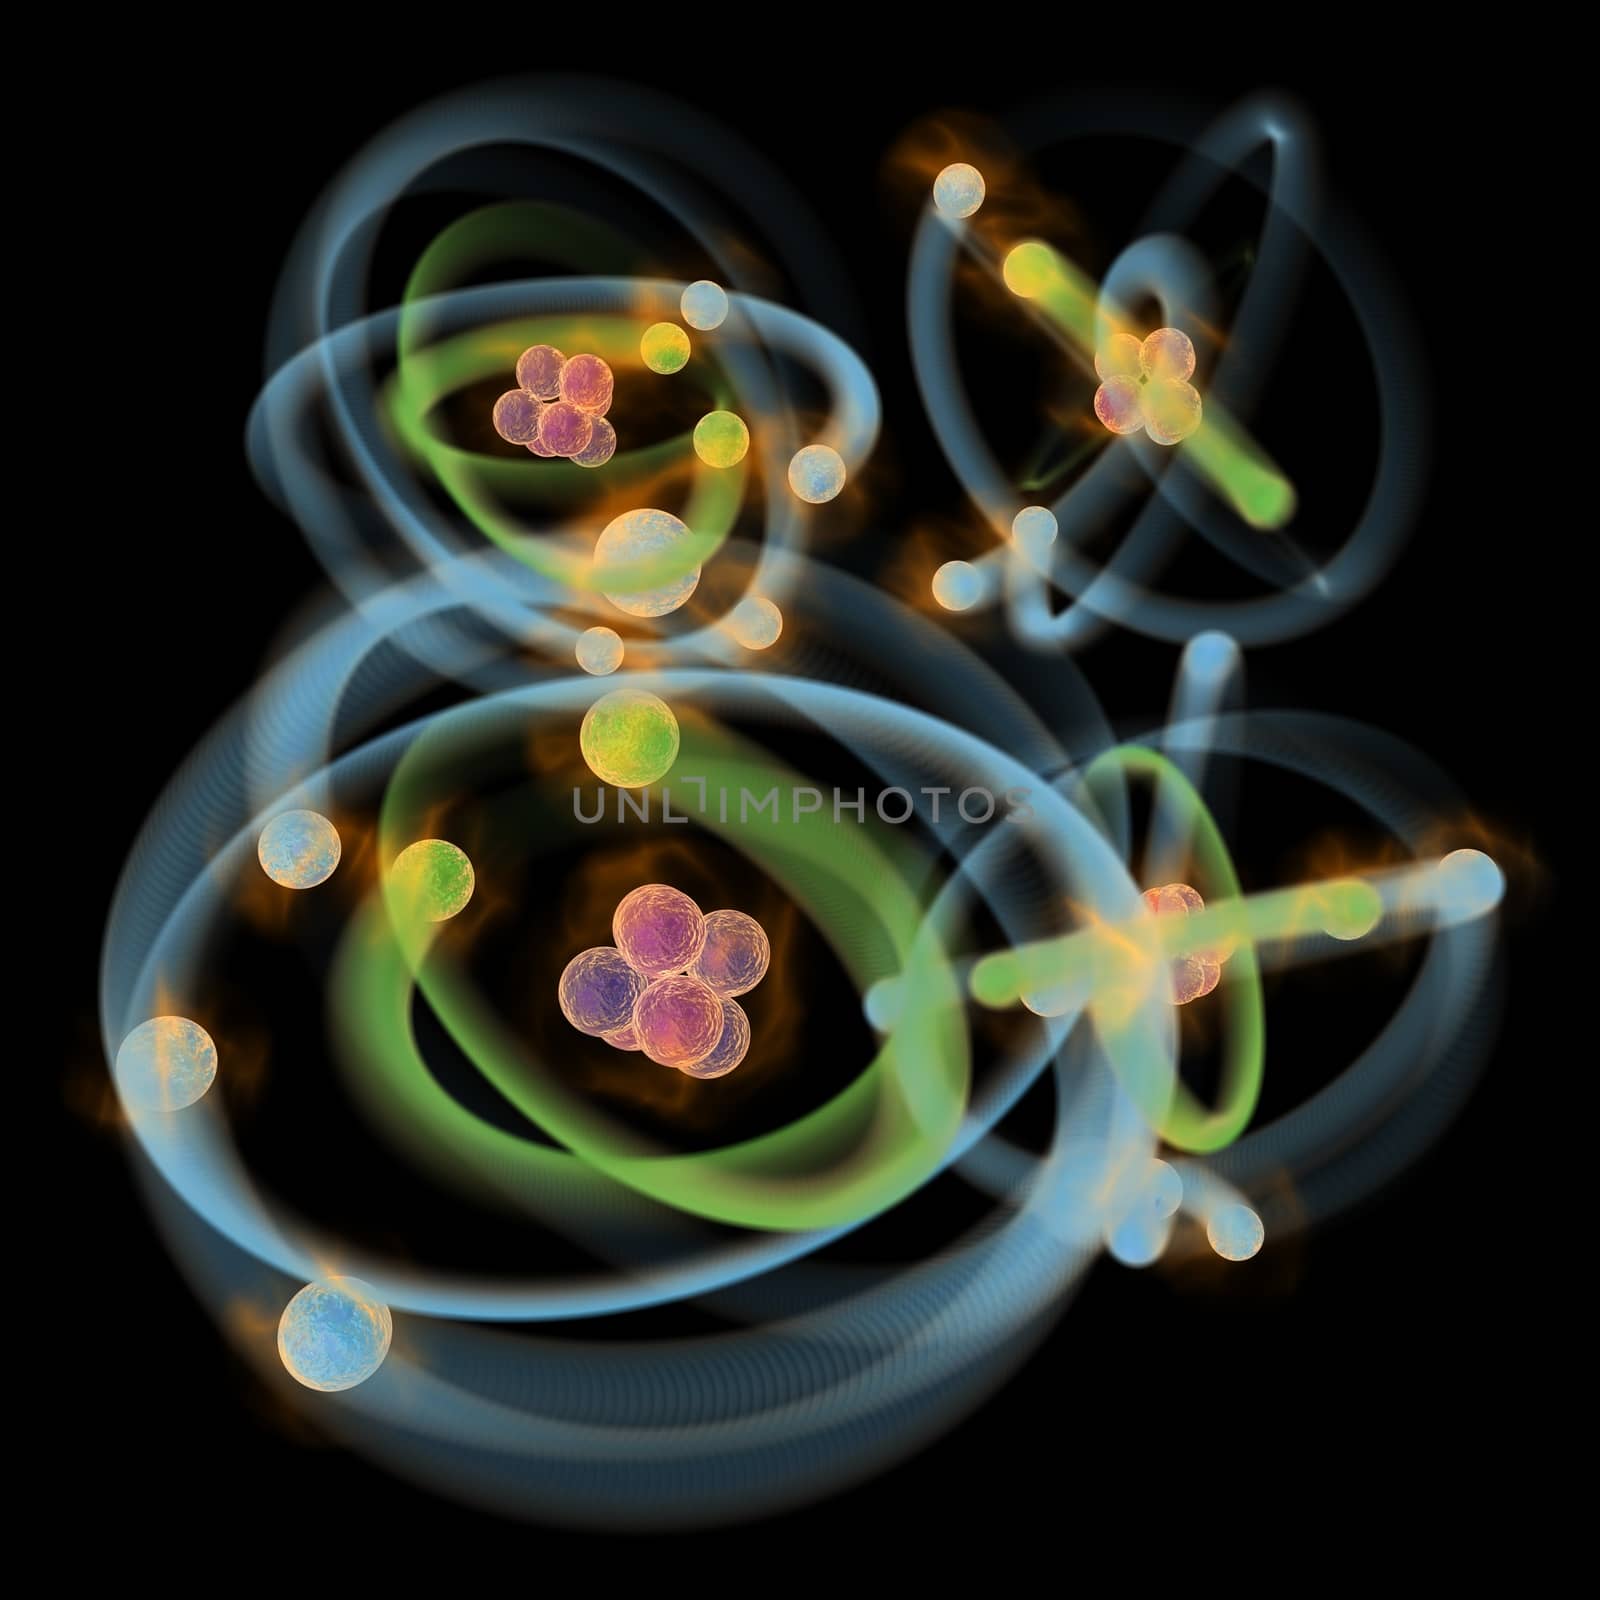 Planetary model of atom by DeoSum